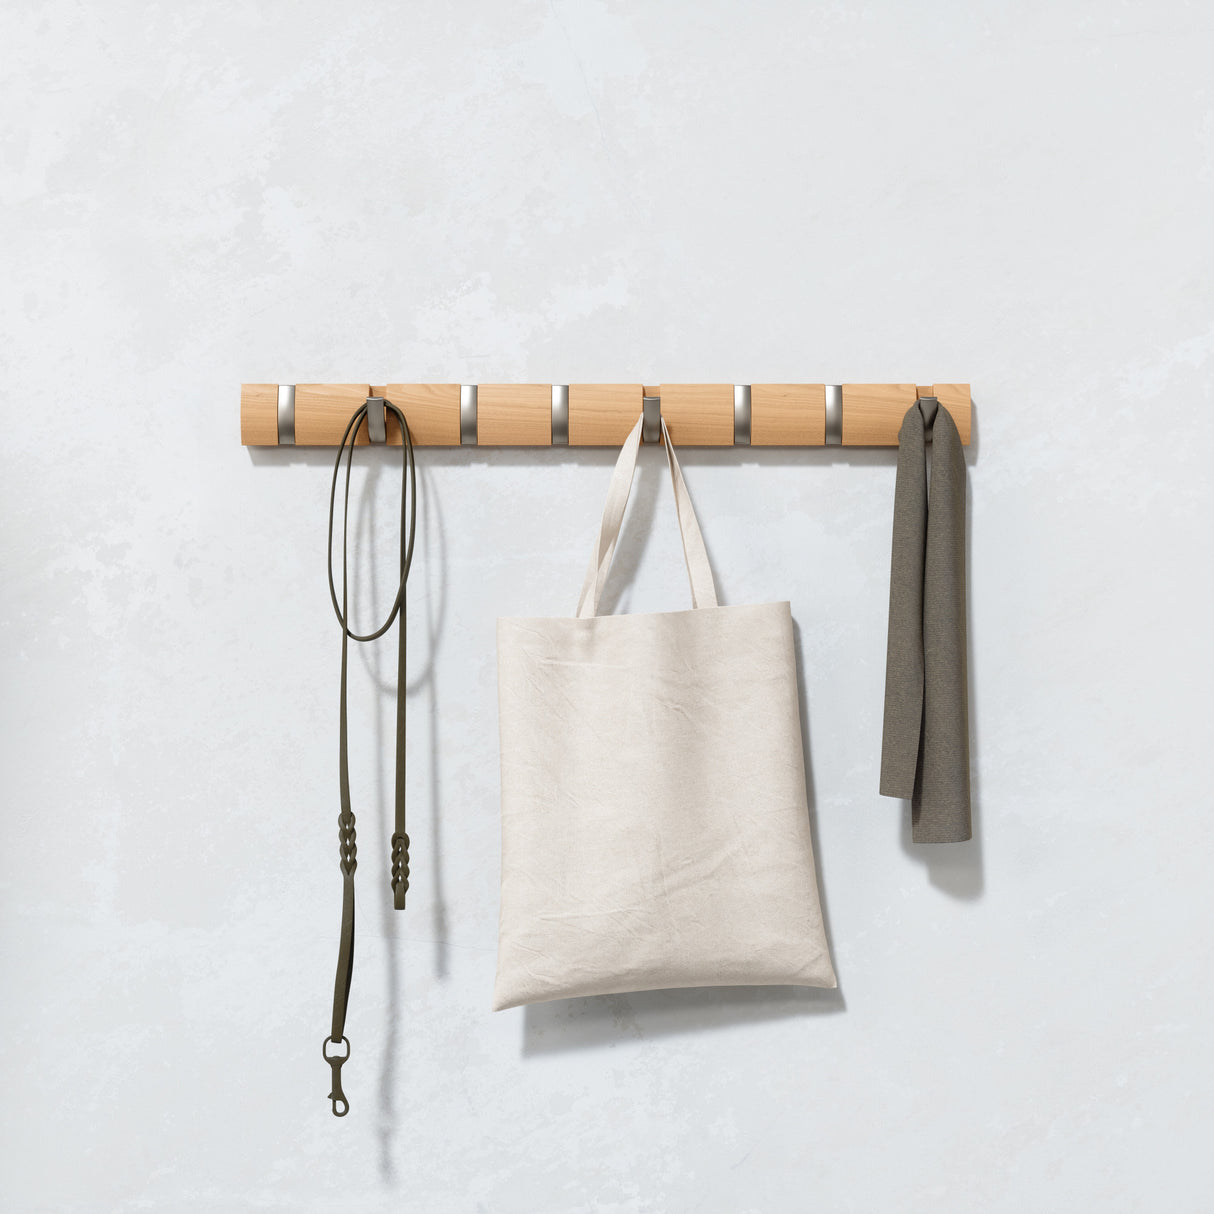 Flip 4-8-Hook Wall Mounted Coat Rack, Key Rack for Wall, Modern, Sleek,  Space-Saving Coat Hanger with 4-8 Retractable Hanging Keys Towels Coat in